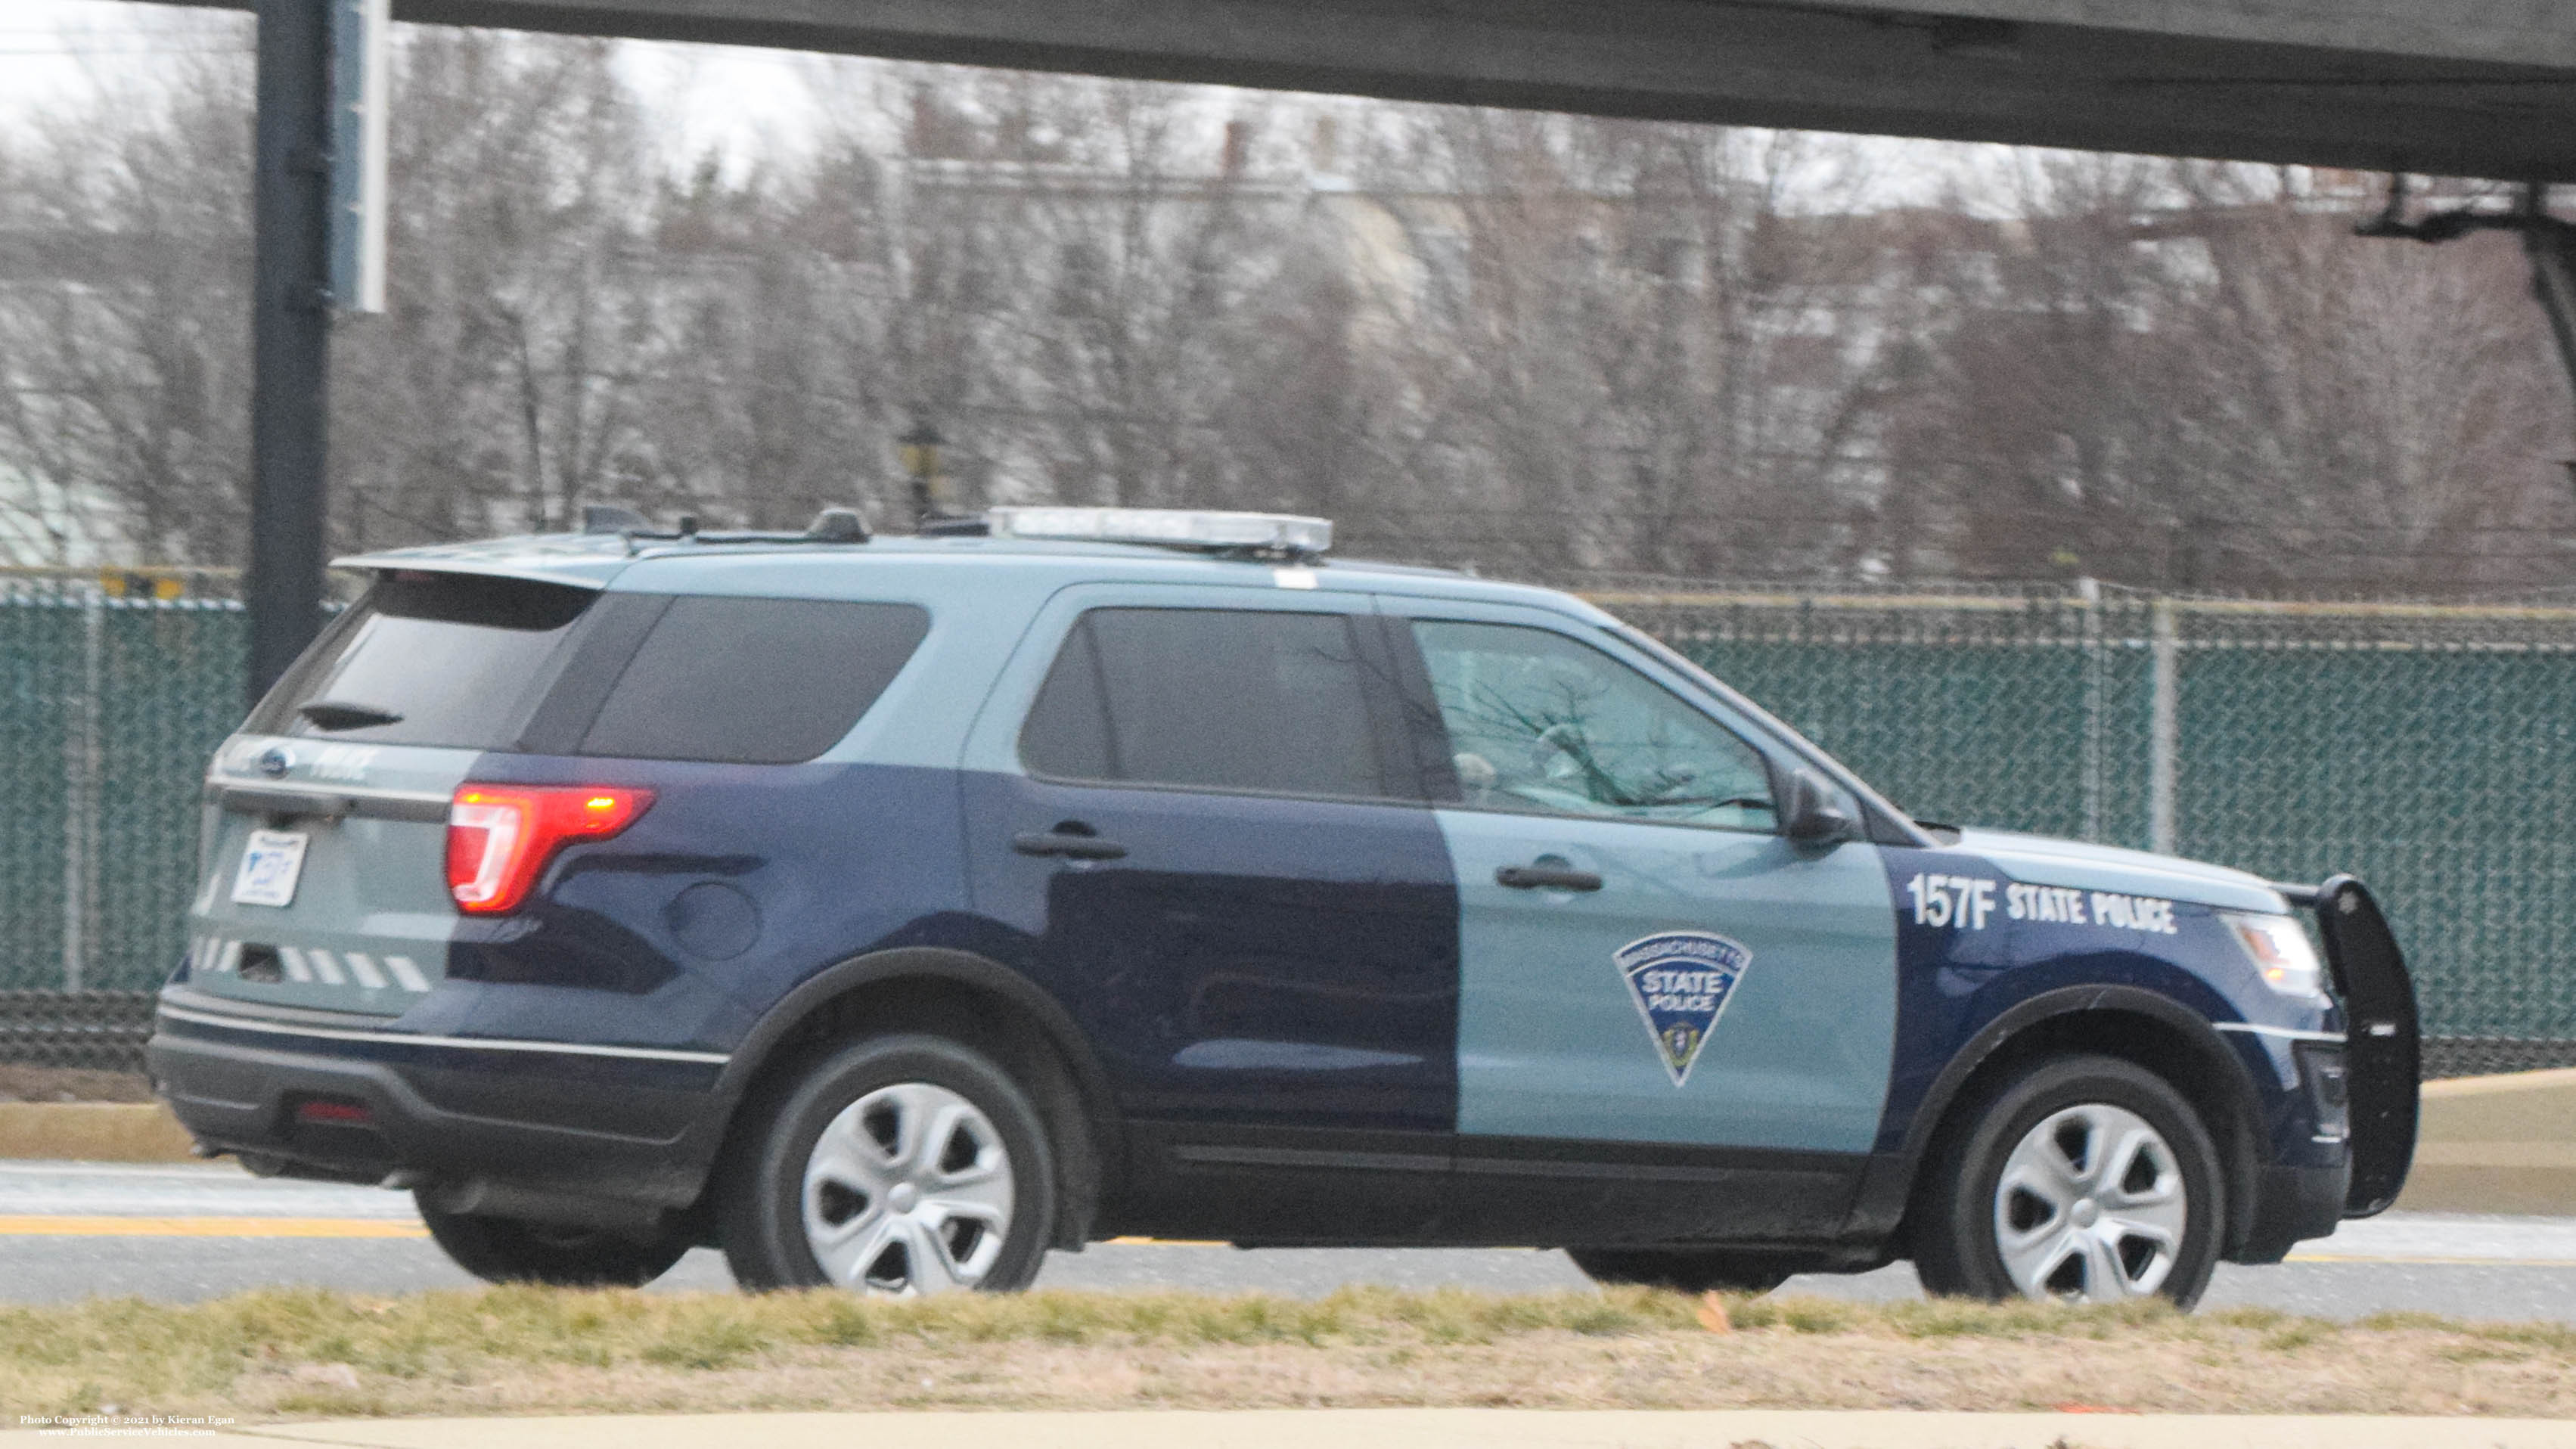 A photo  of Massachusetts State Police
            Cruiser 157F, a 2019 Ford Police Interceptor Utility             taken by Kieran Egan